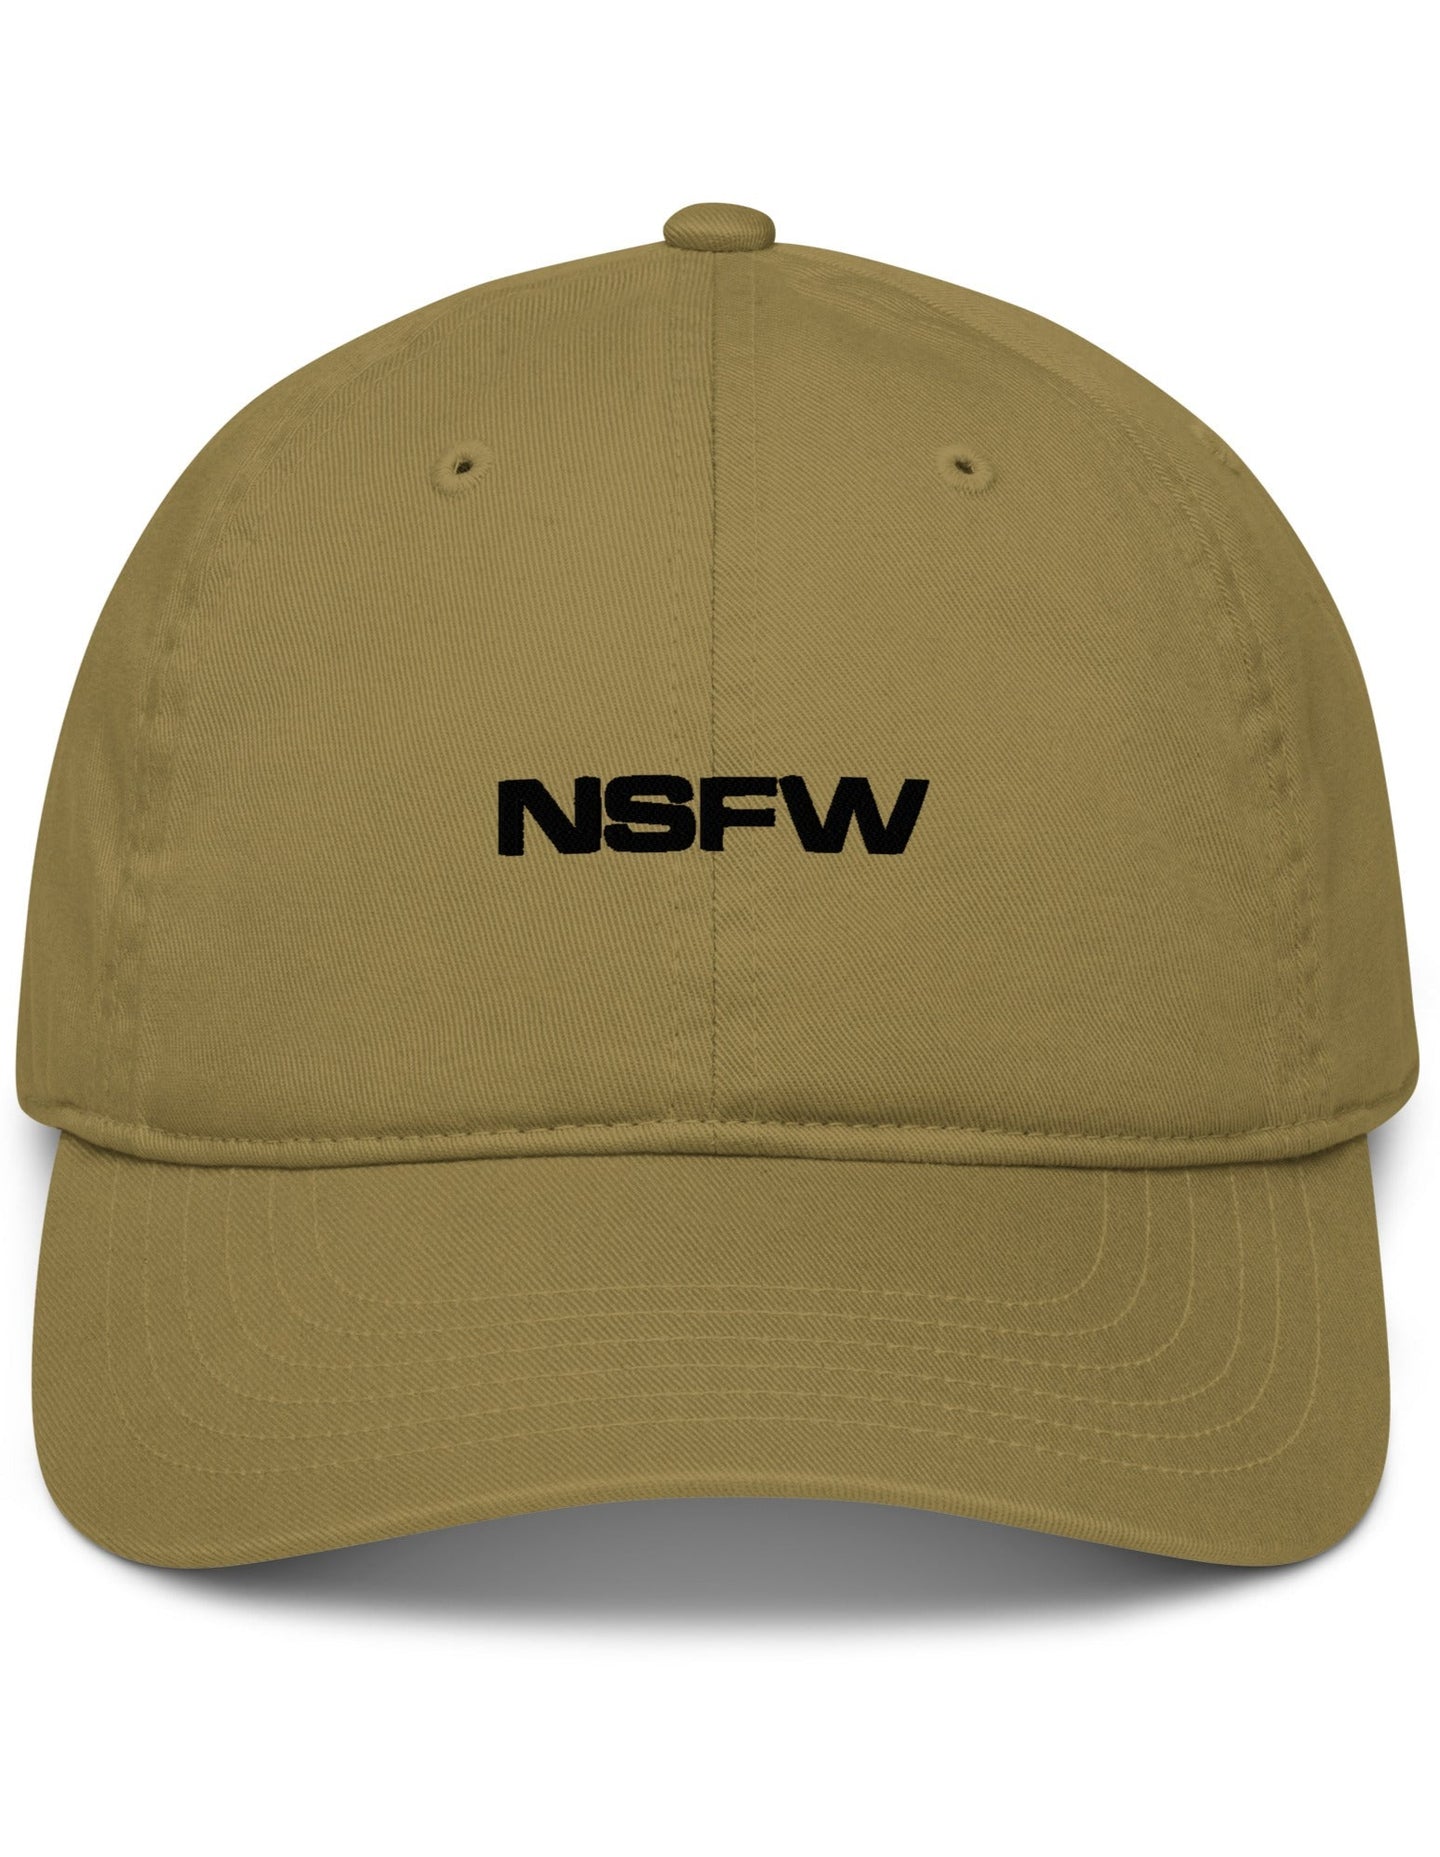 NSFW black thread hat